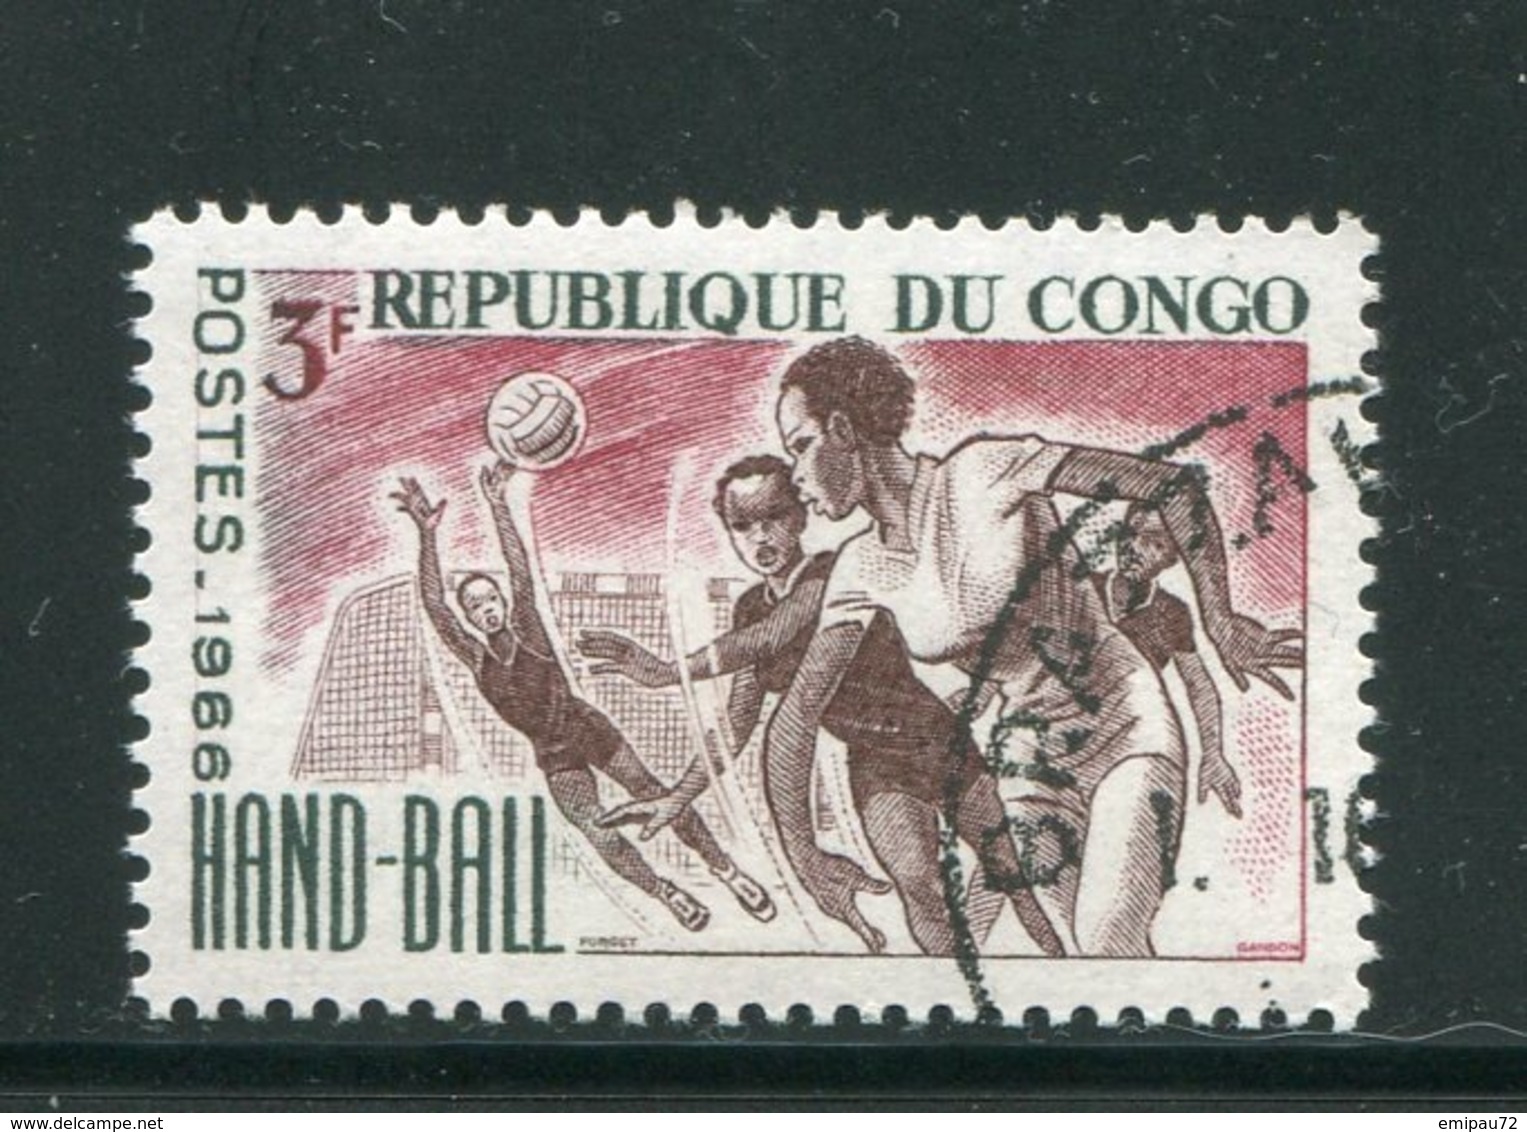 CONGO- Y&T N°191- Oblitéré (hand-ball) - Used